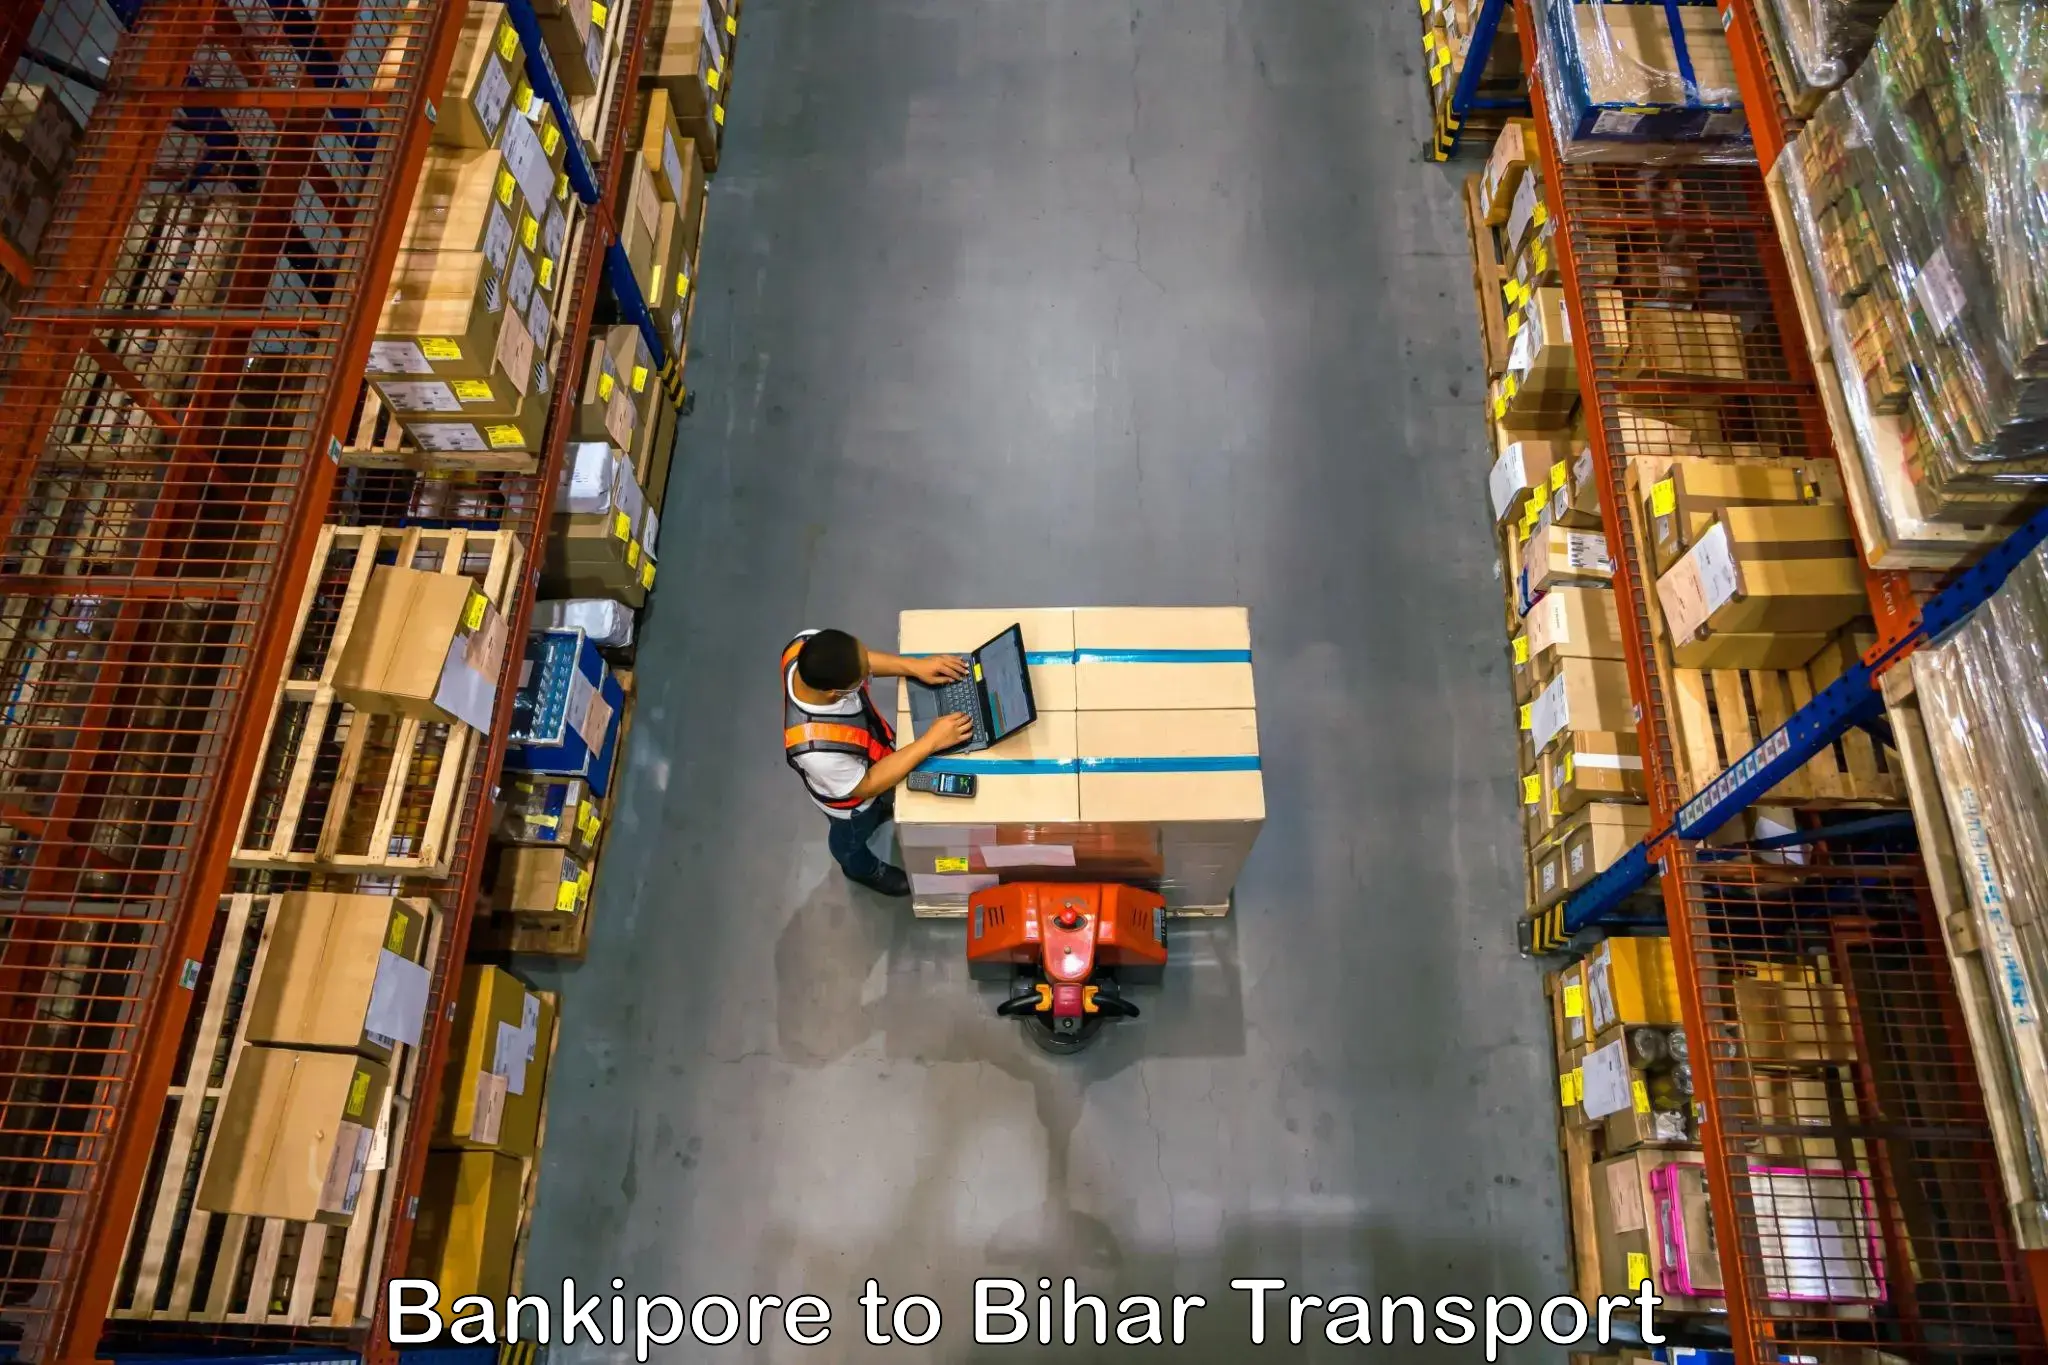 Furniture transport service Bankipore to Chhapra